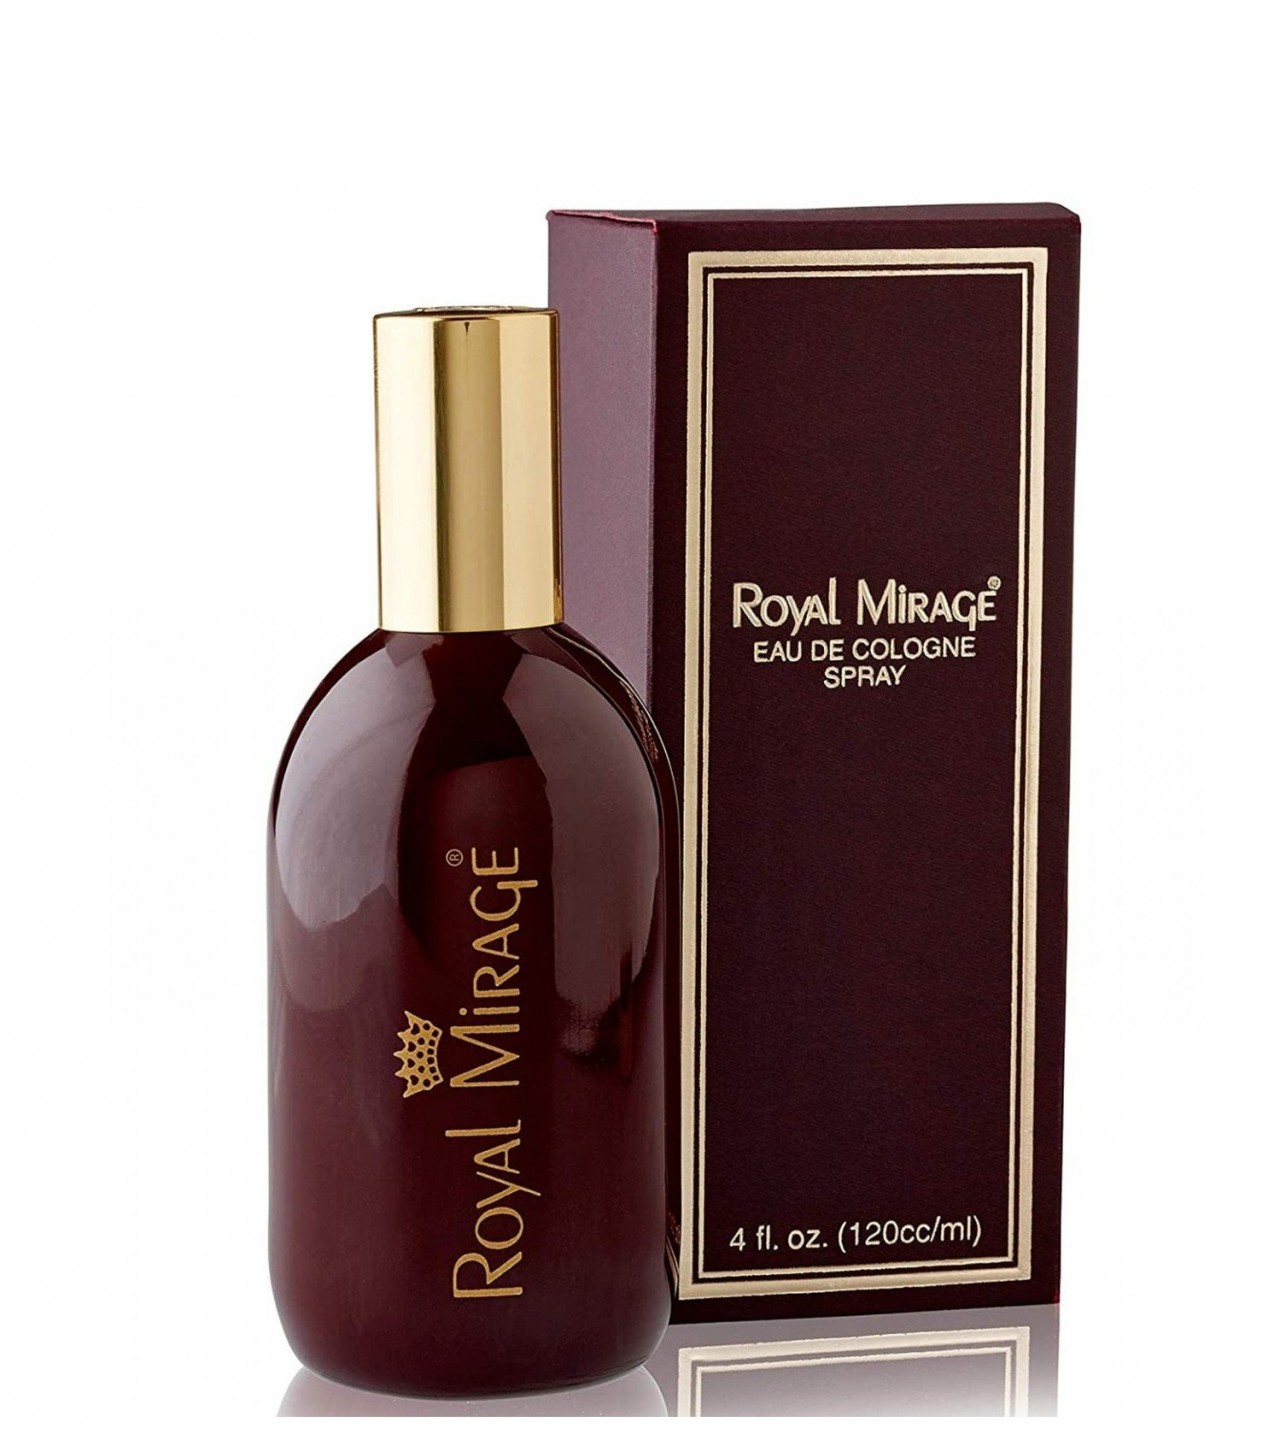 Royal Mirage Brown Perfume For Men – Eau de Cologne – 120 ml